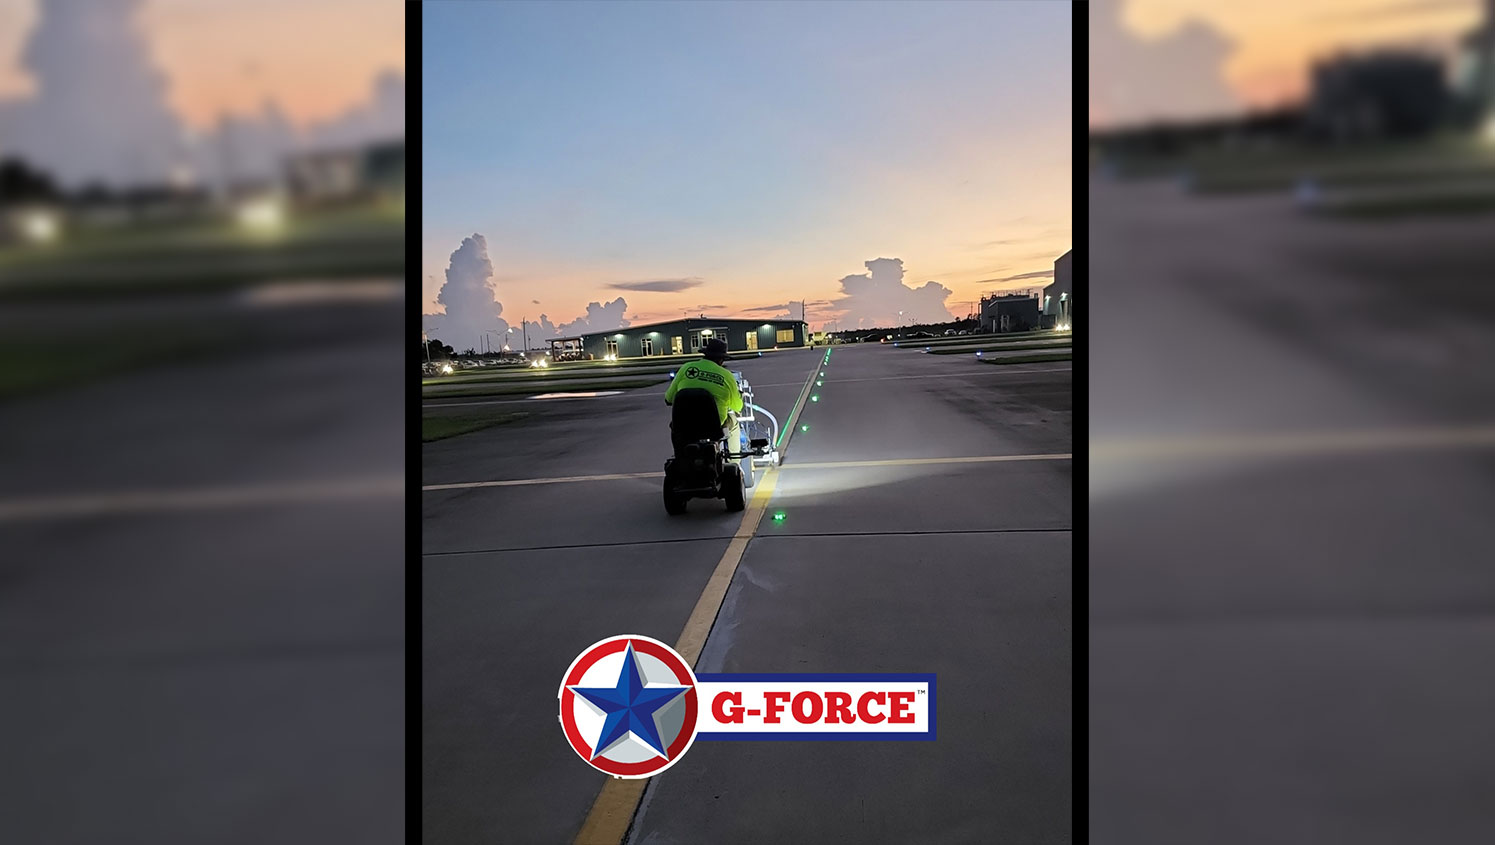 g-force machine striping new air base markings